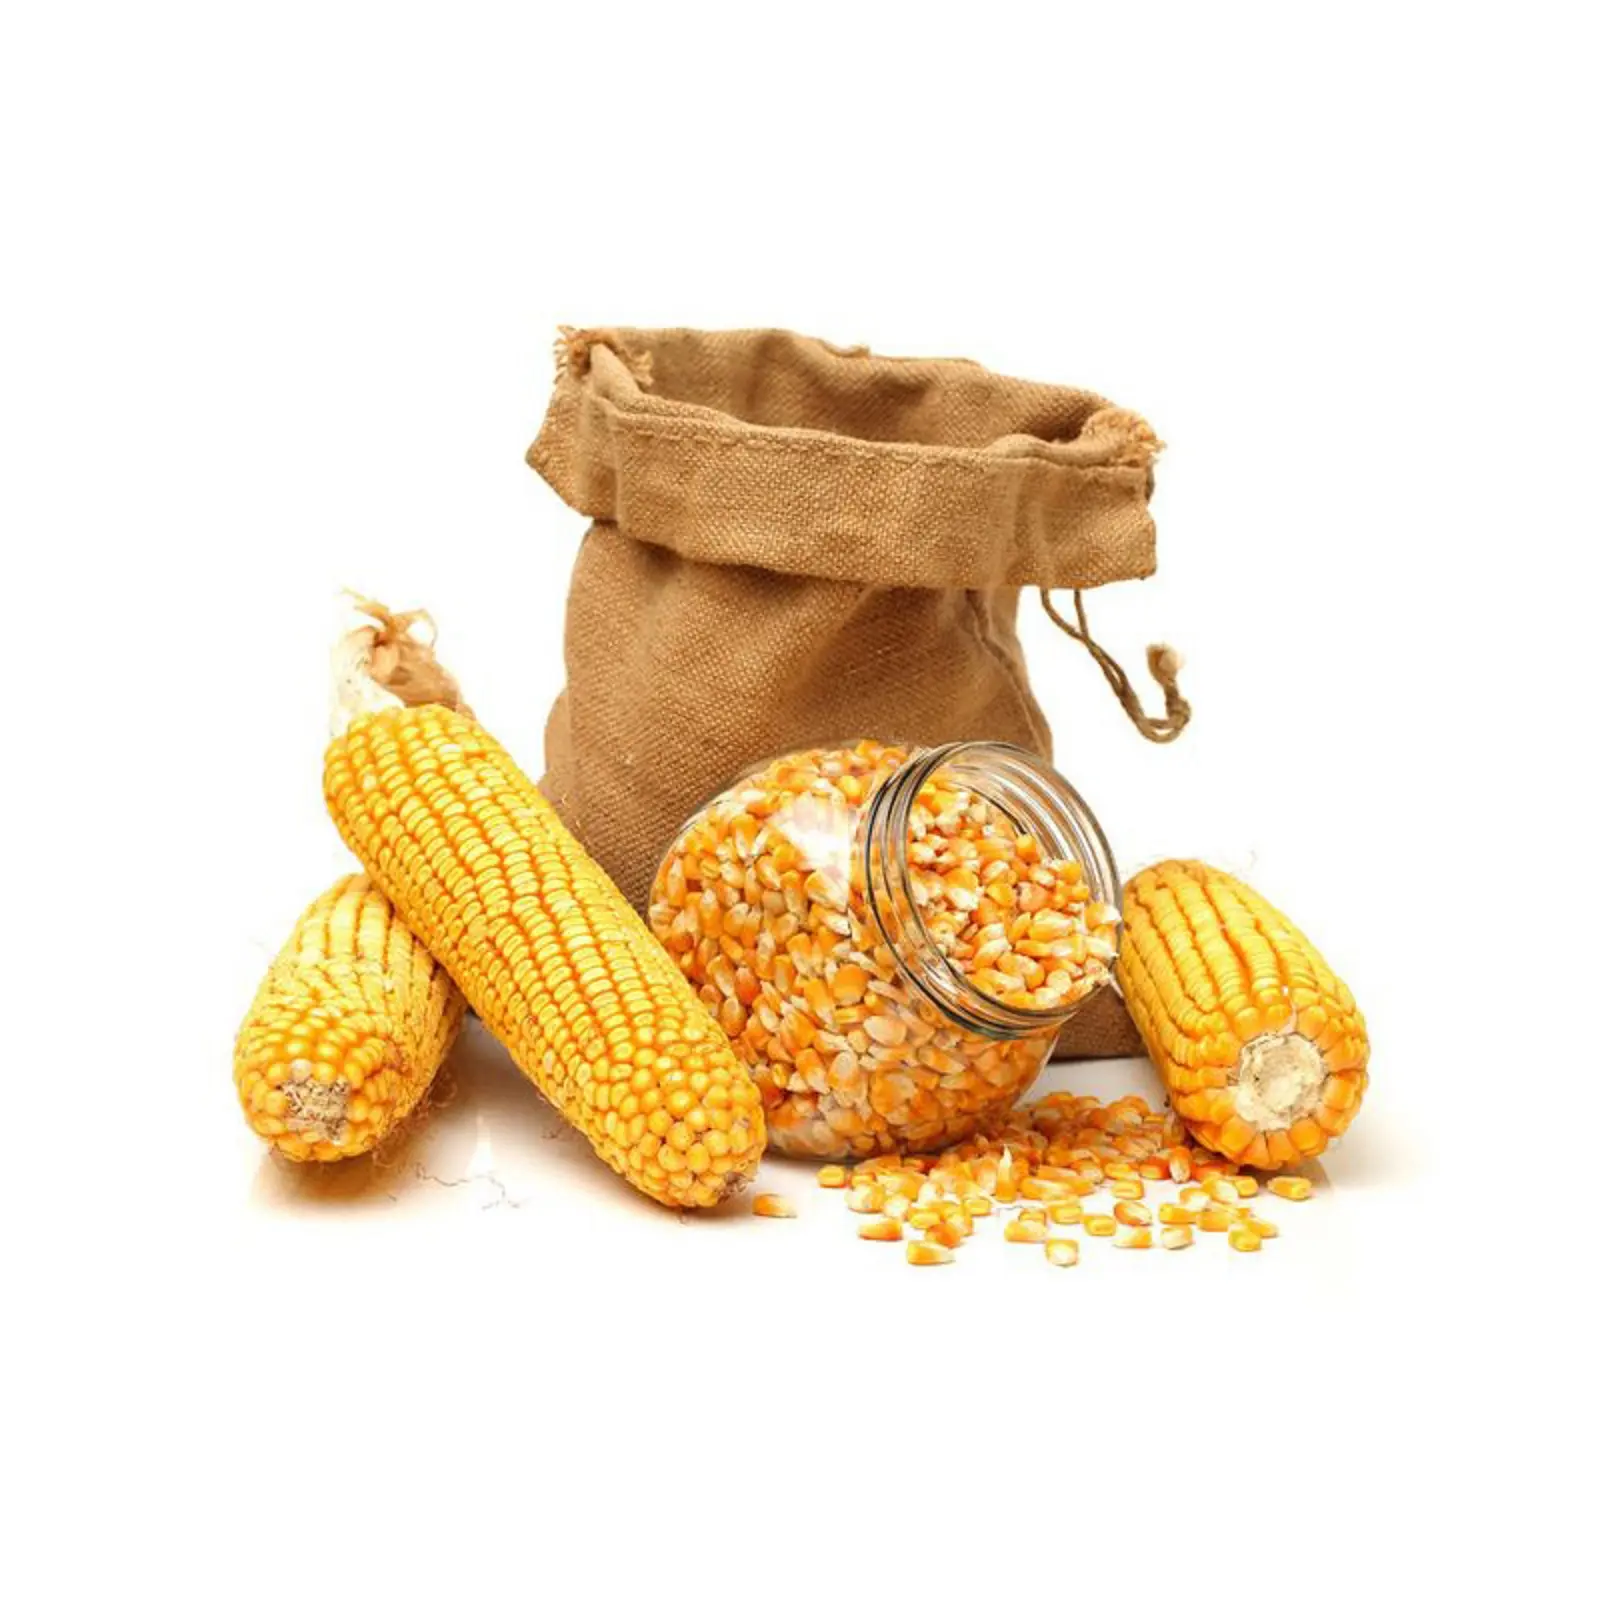 Yellow Corn For Human Consumption Best quality Non GMO yellow corn